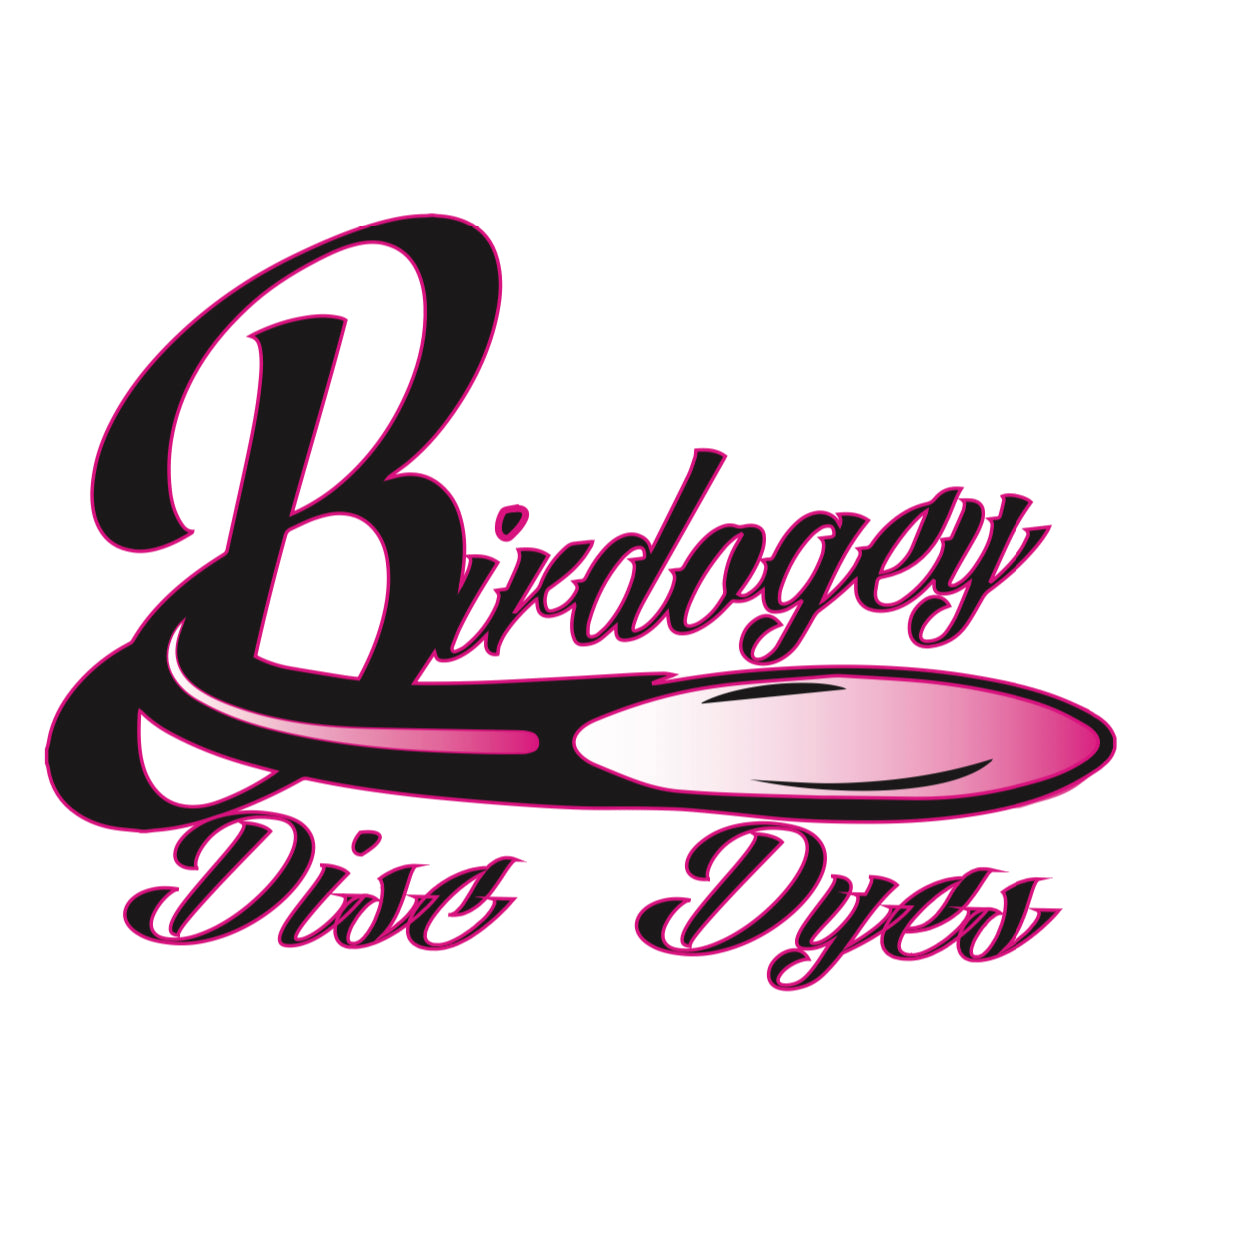 Birdogey Disc Dyes